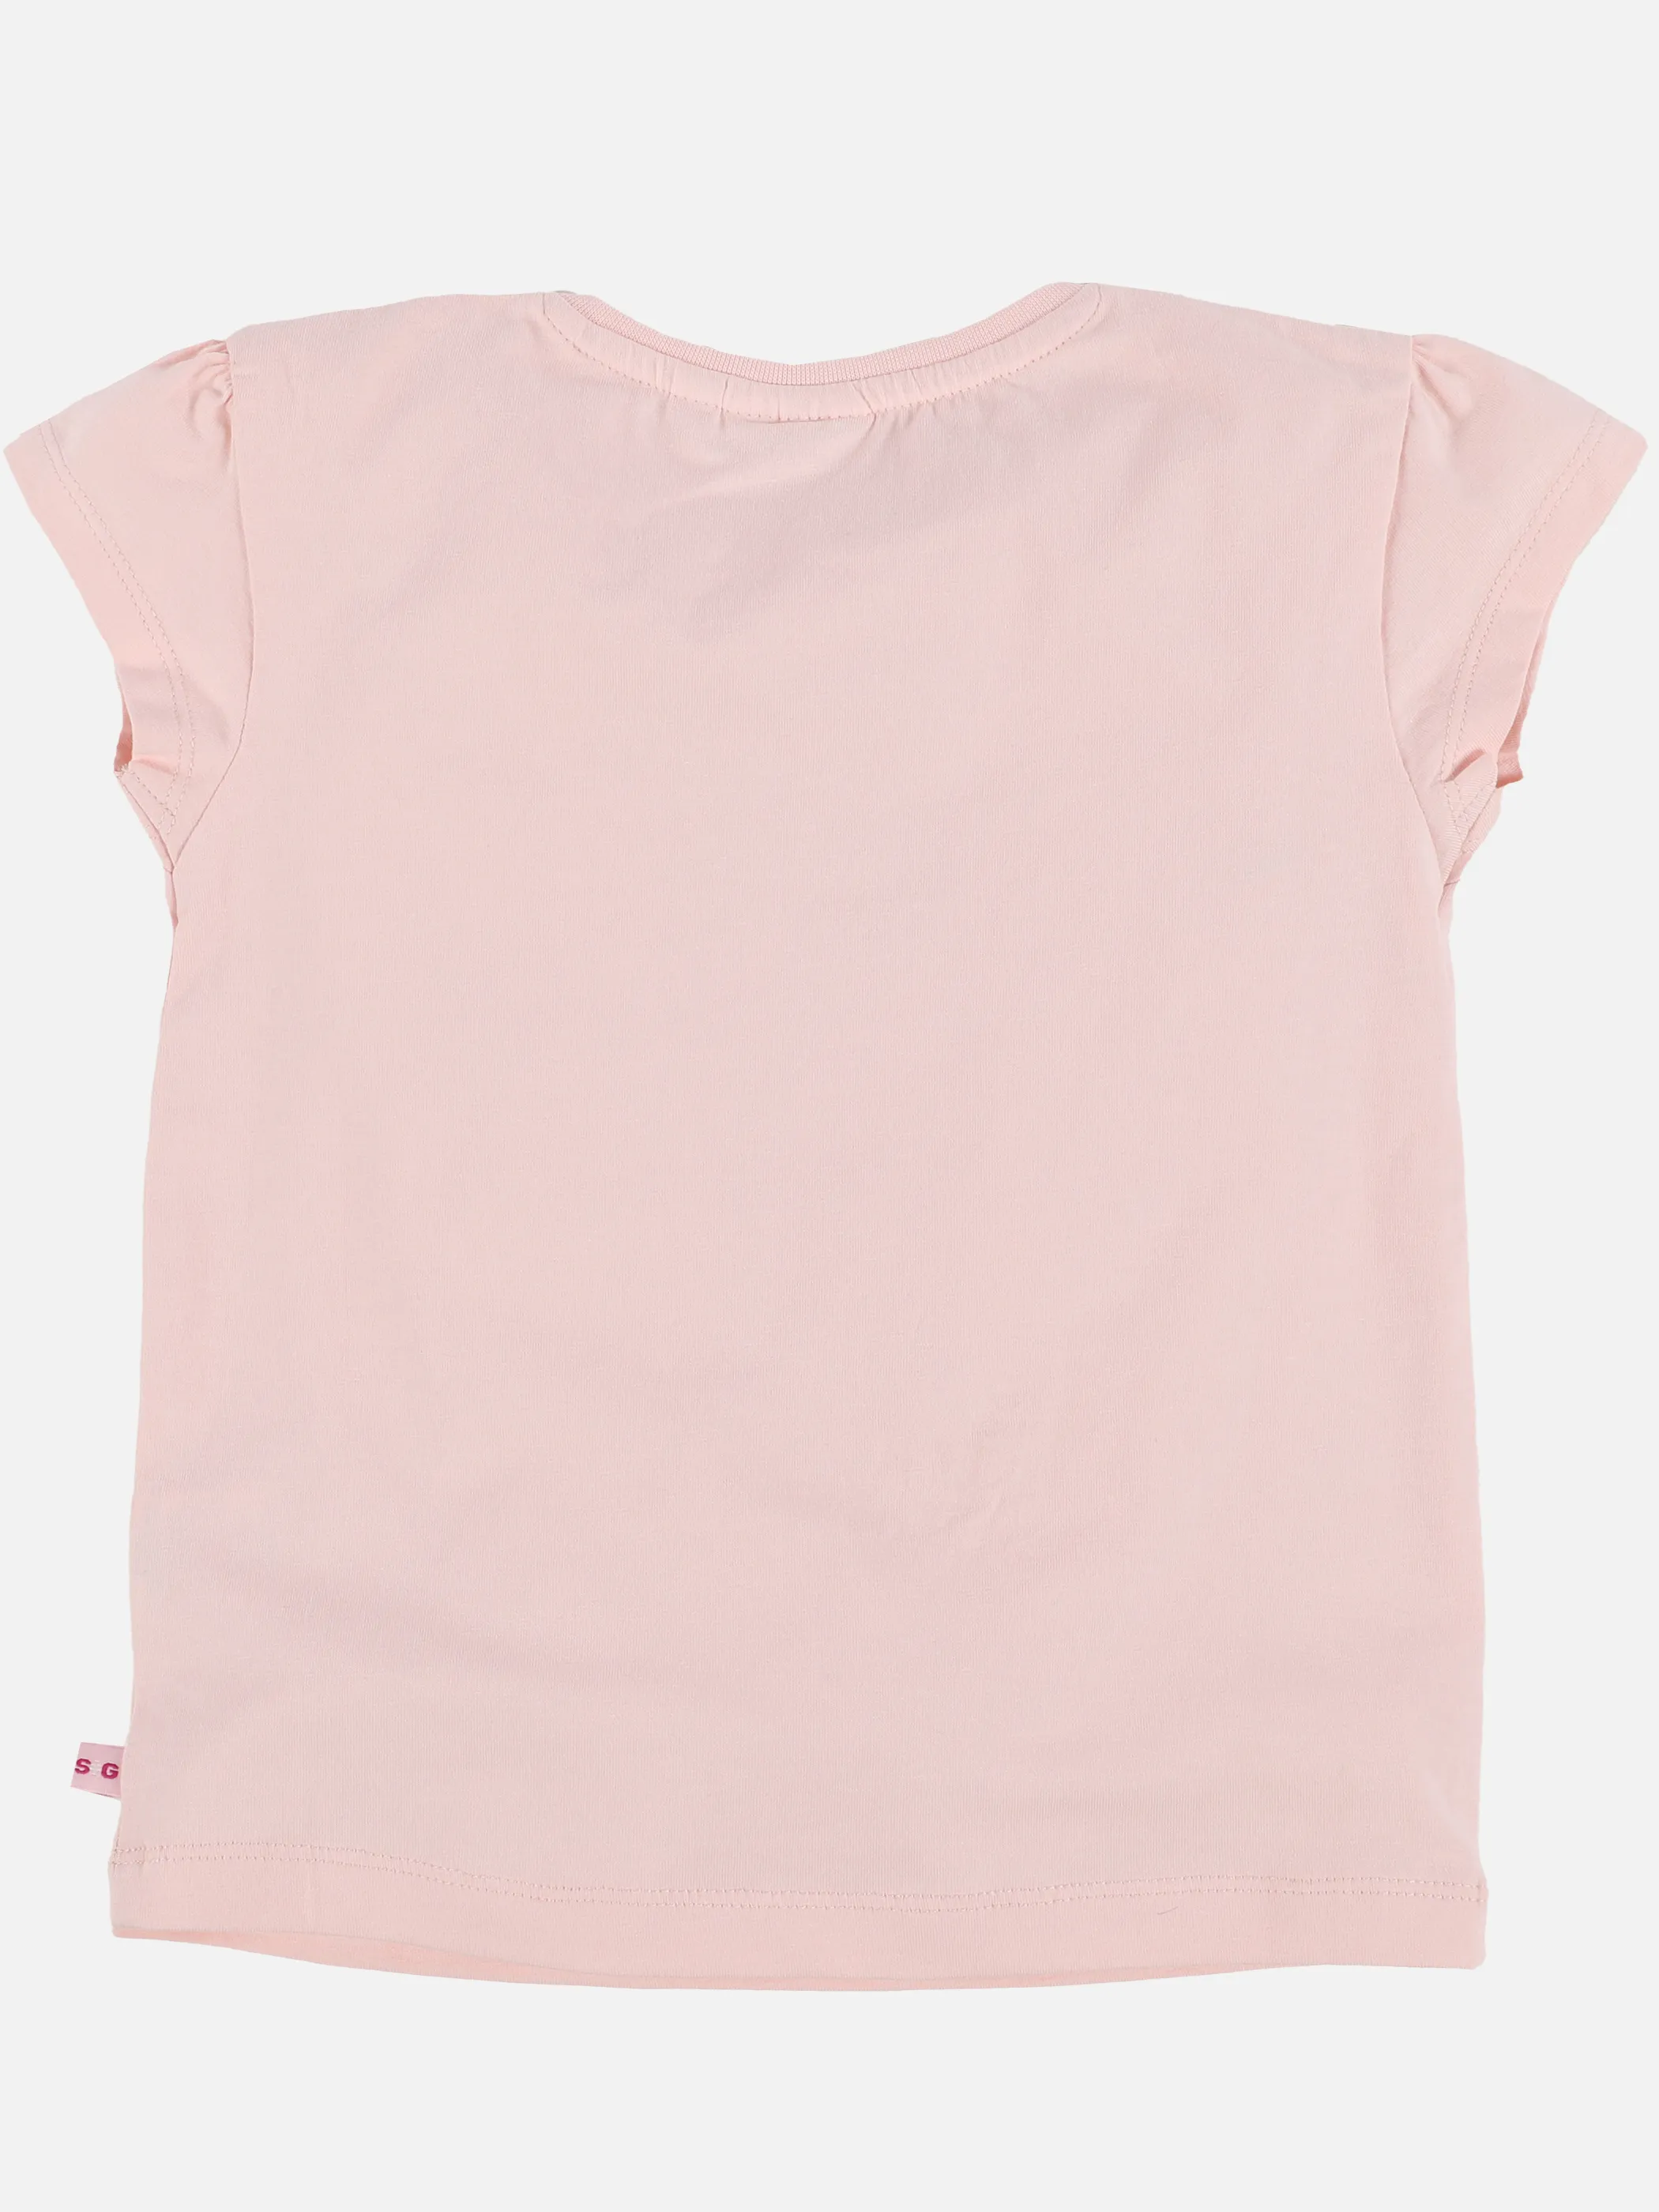 Stop + Go KM T-Shirt mit Ballerina-Einhorn Druck in rosa Rosa 890781 ROSA 2